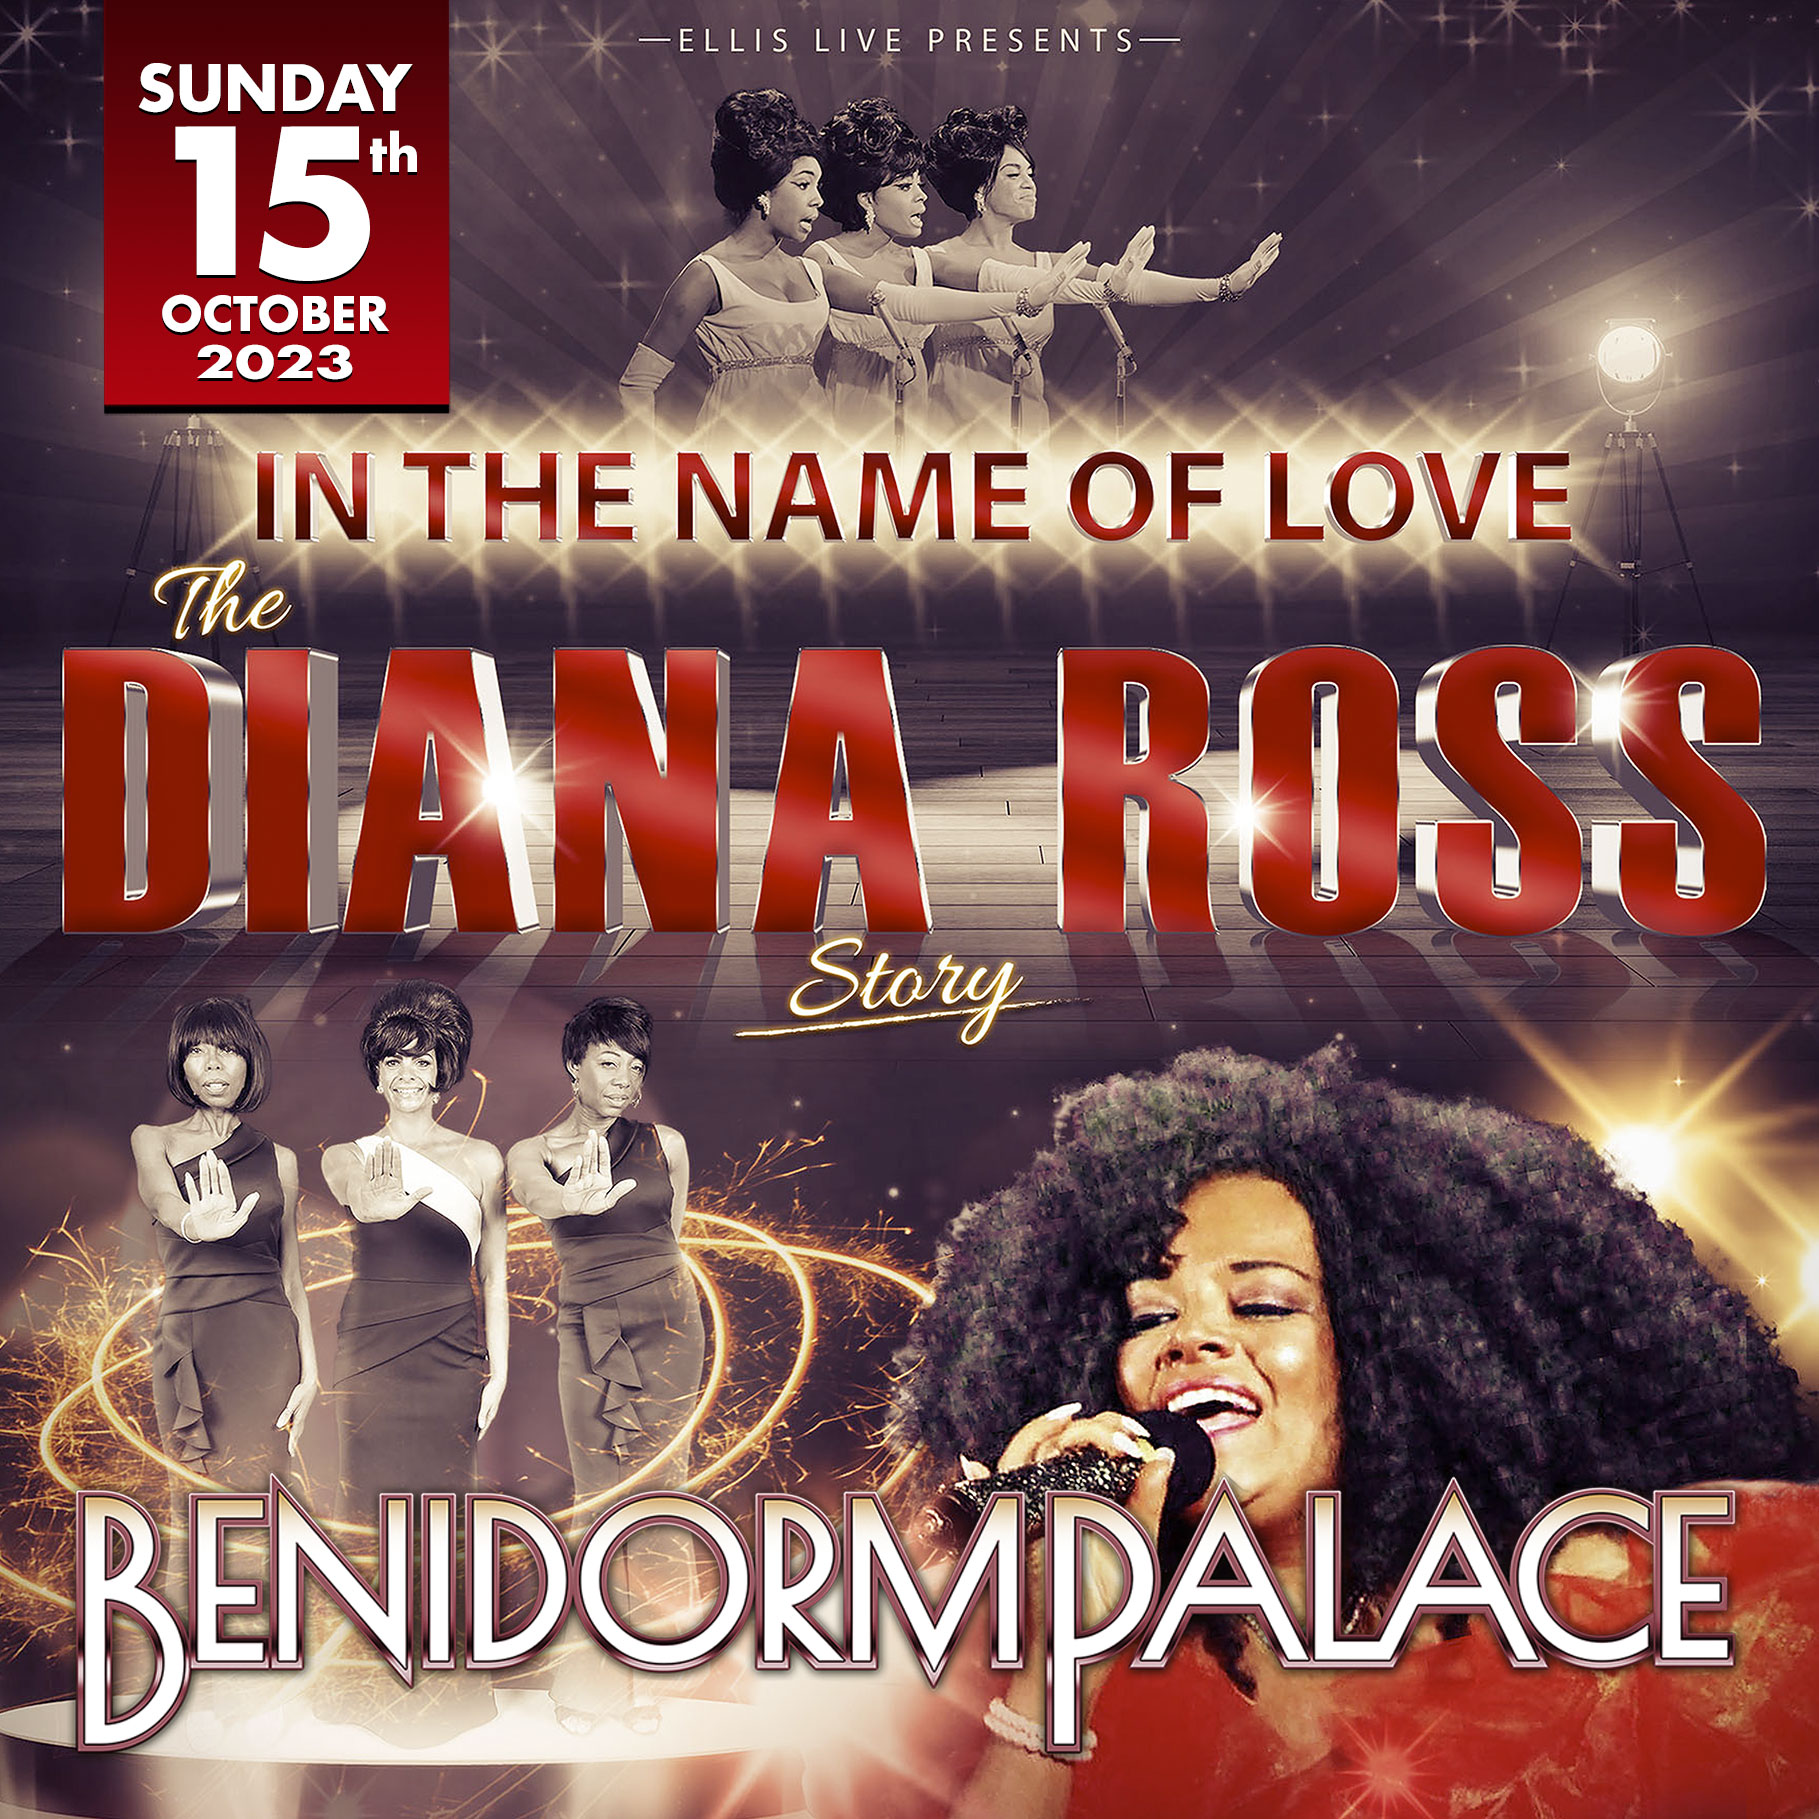 Diana Ross Story en Bendorm Palace